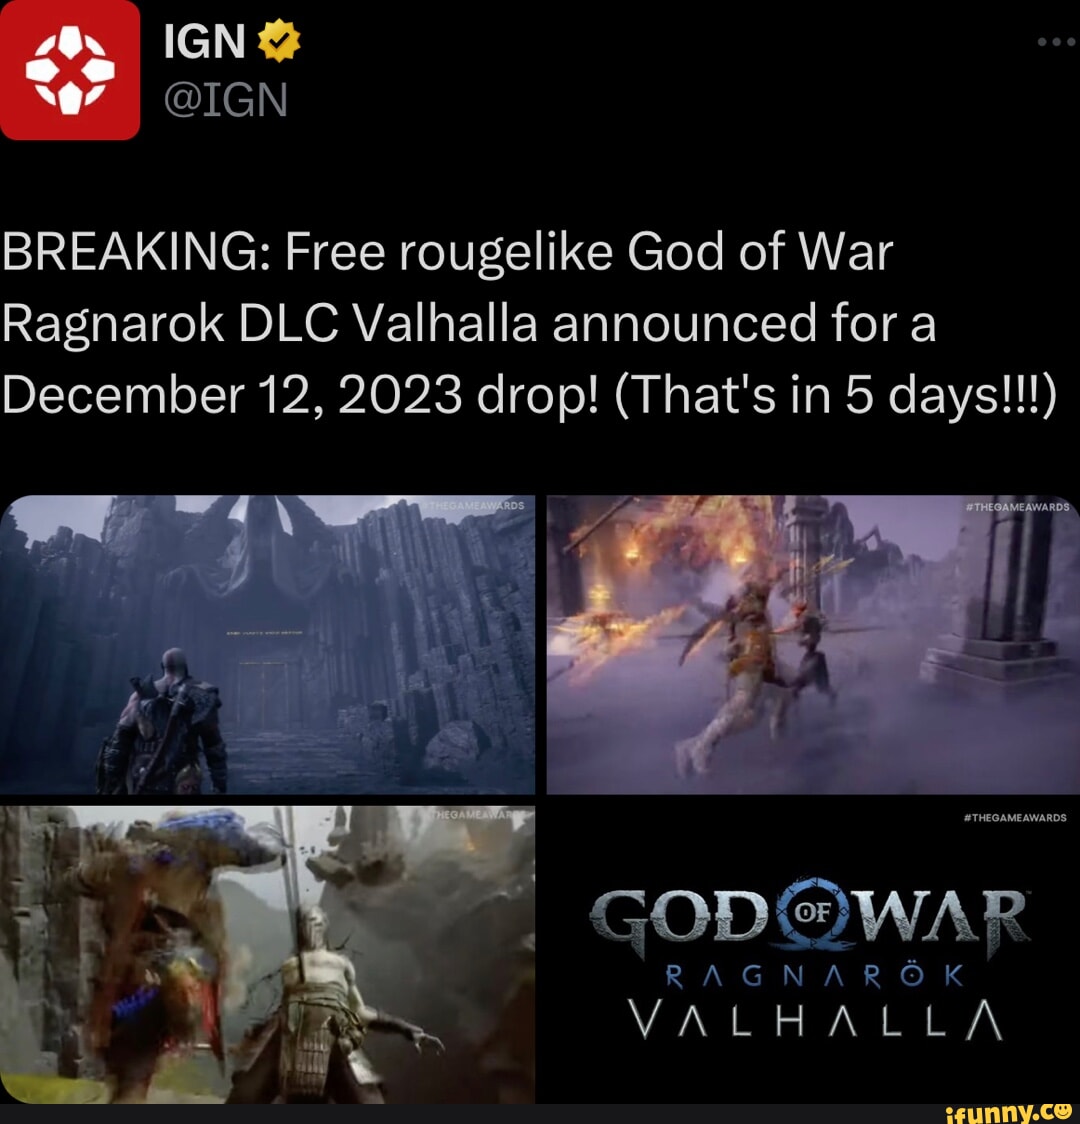 God of War Ragnarok: Valhalla countdown - Exact start time and